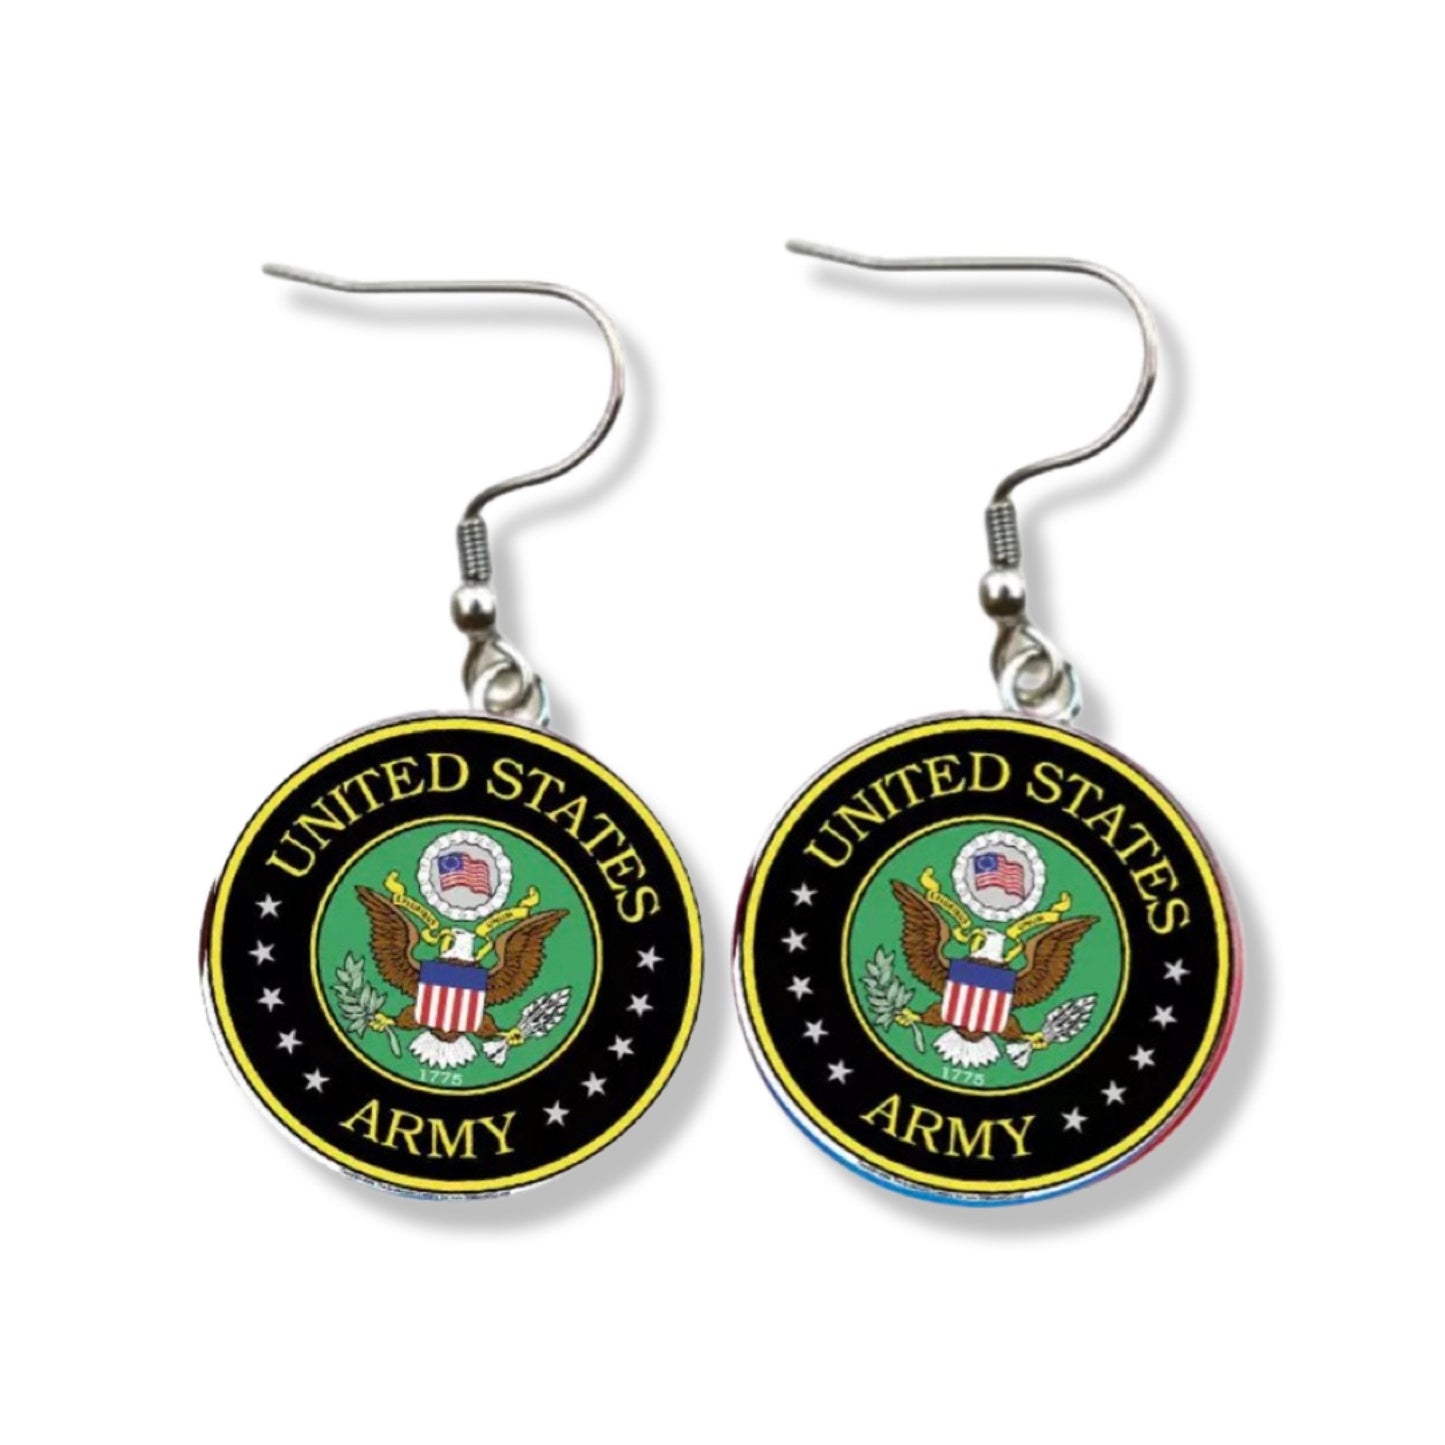 Military Mom Earrings - Handmade Jewelry, Army Earrings, Handmade Earrings, Army Earrings, Military Earrings, Military Accessories